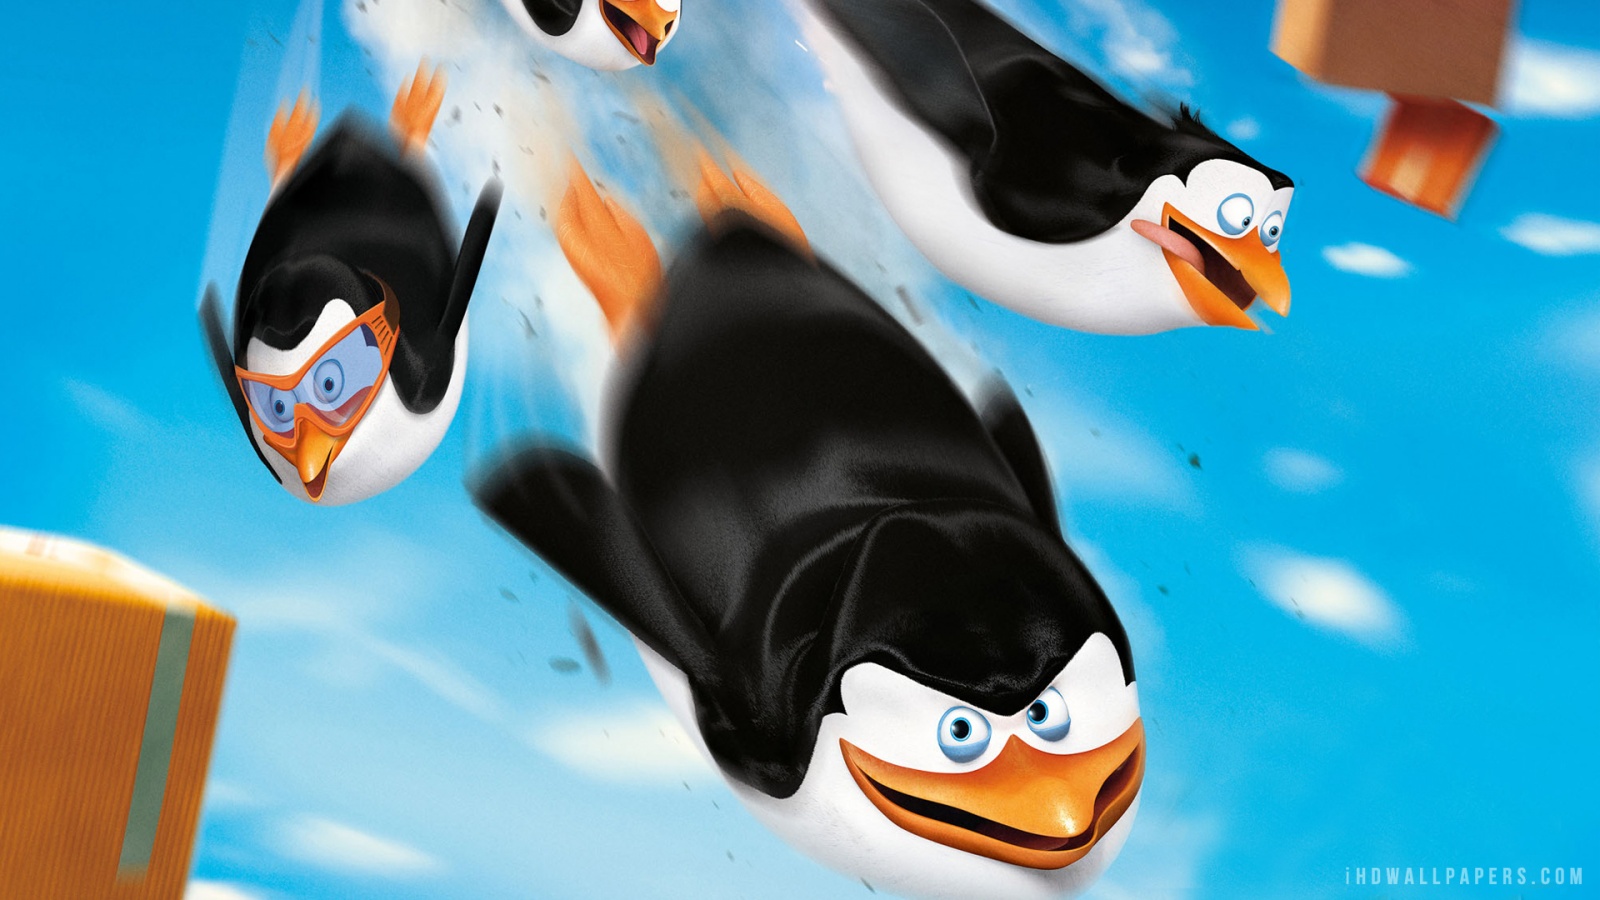 Penguins Of Madagascar Movie HD Wallpaper IHD